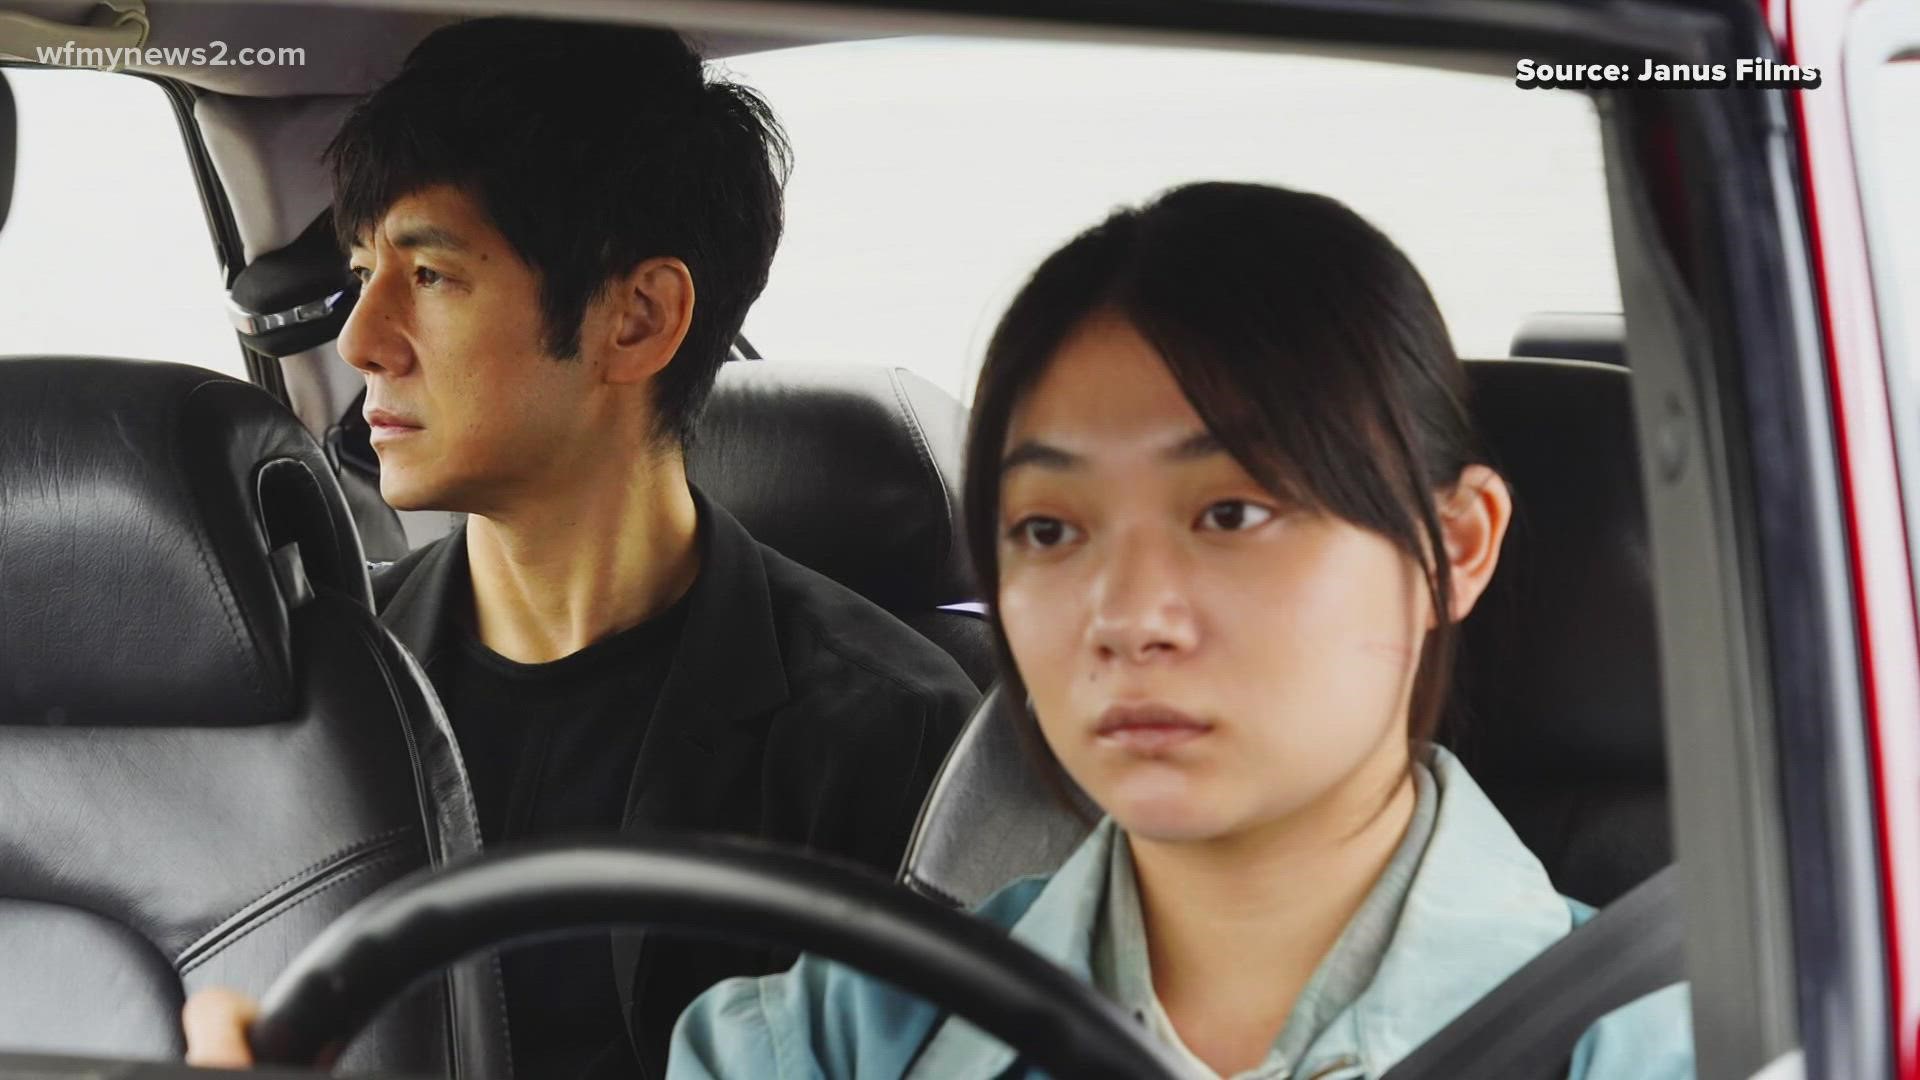 The Japanese film won 'Best International Feature Film' Sunday night at the Oscars.